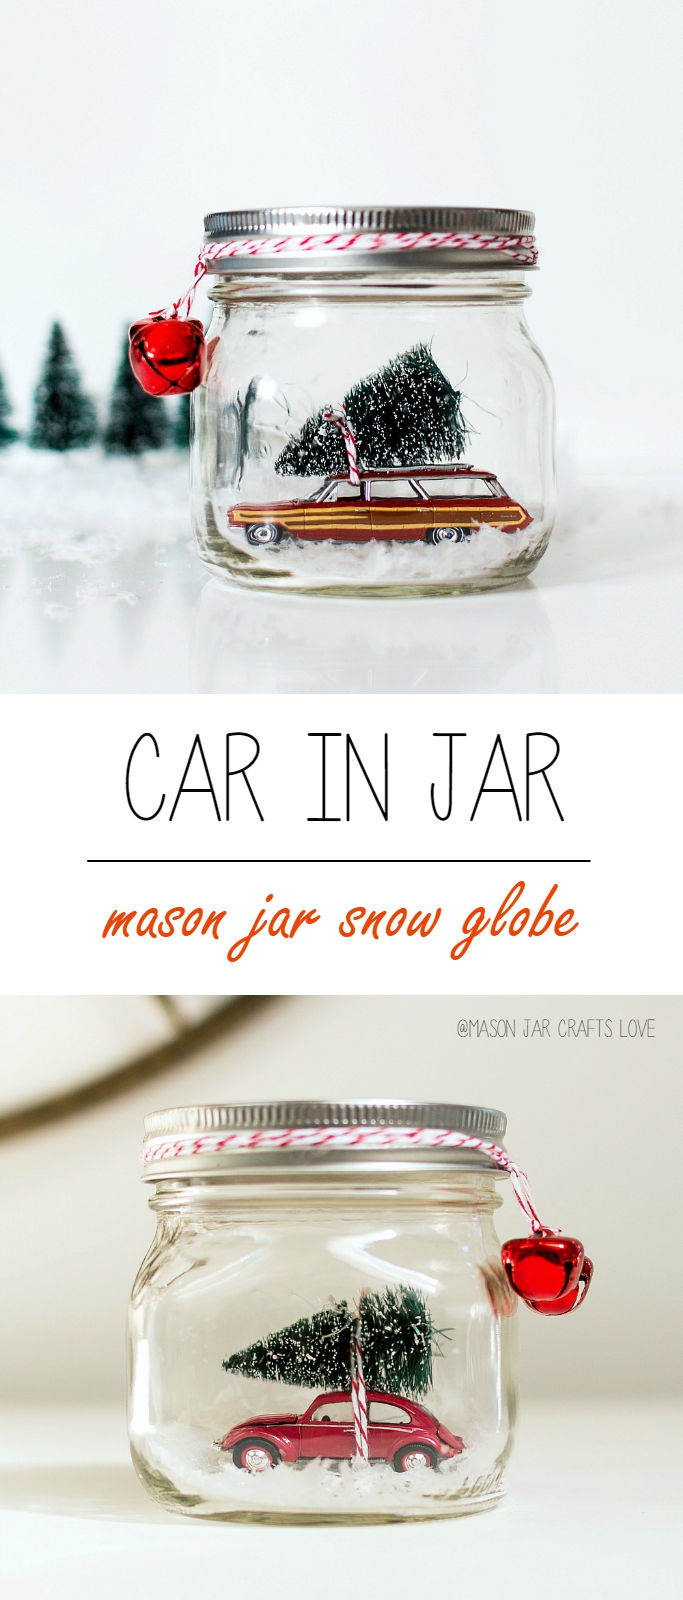 Car in Jar Snow Globe